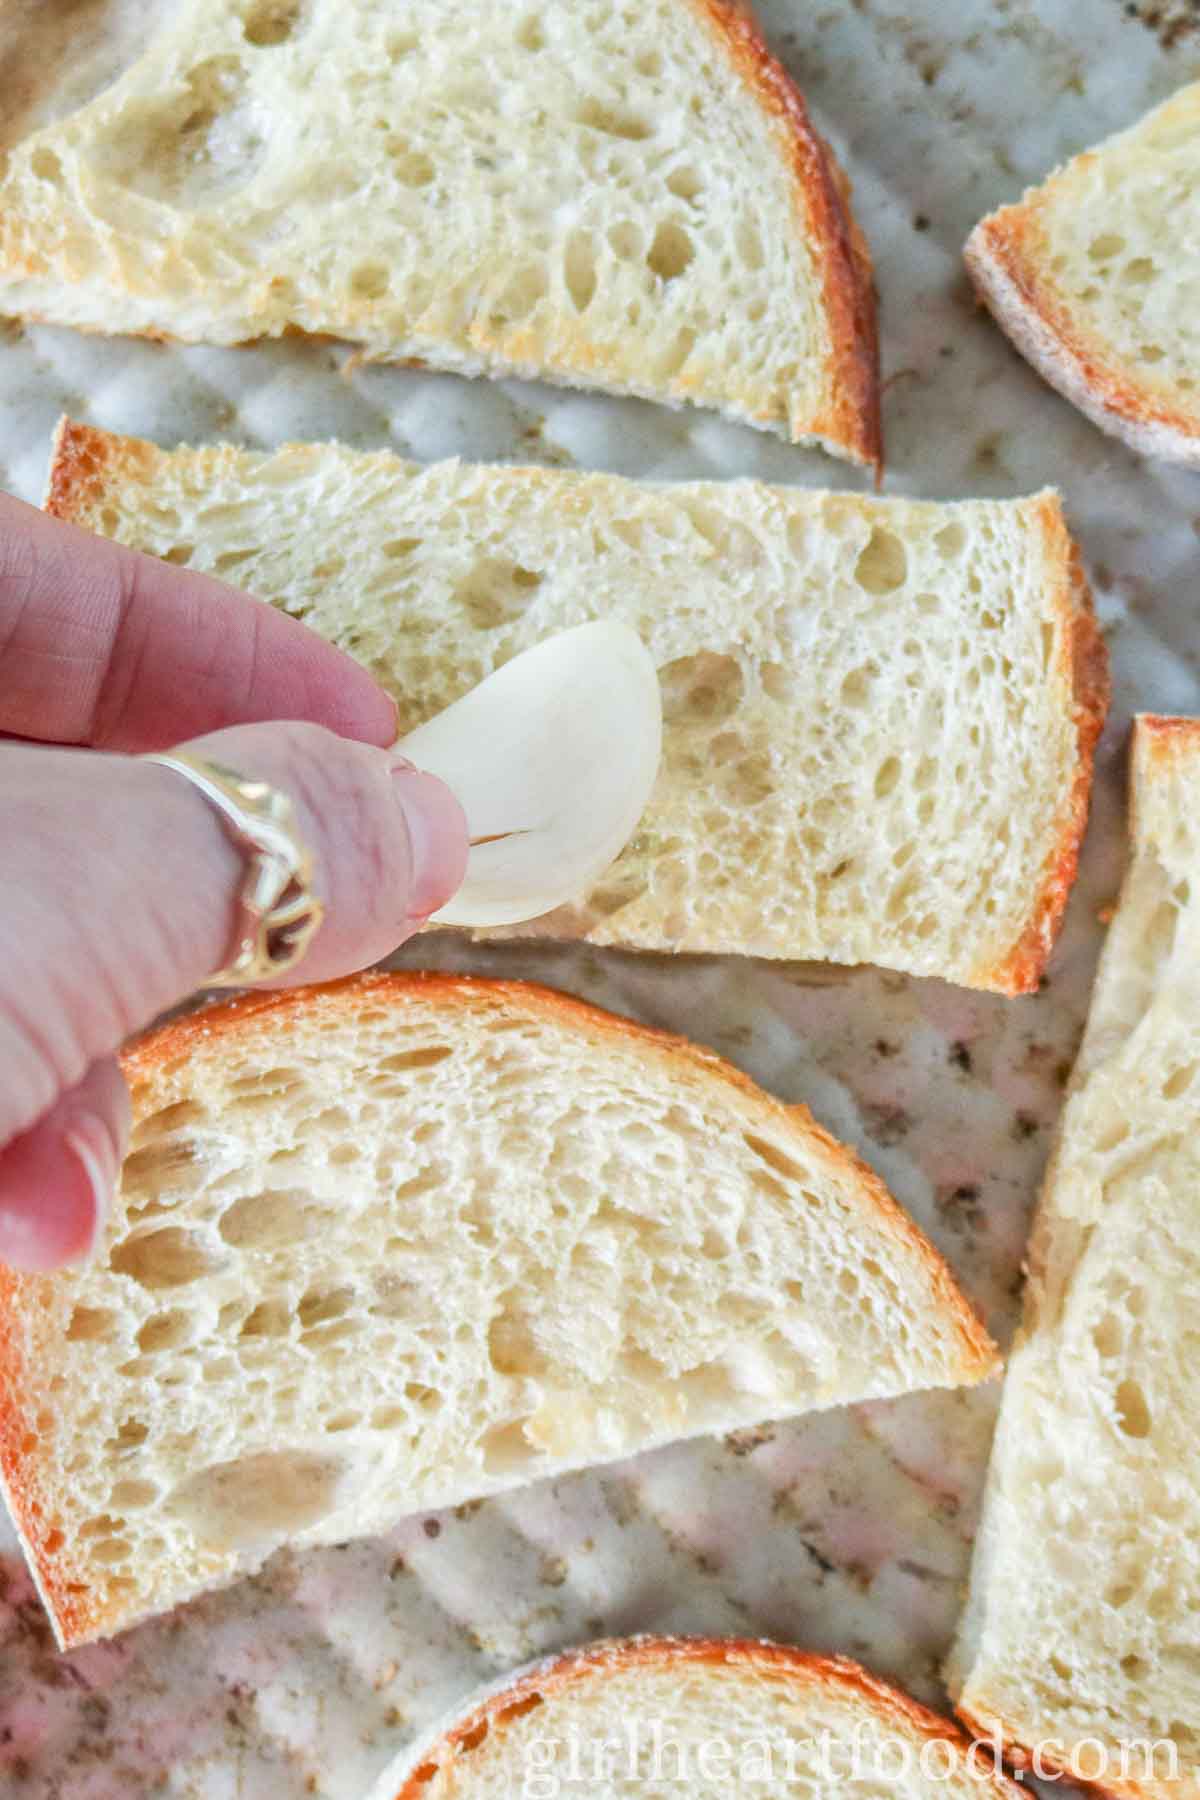 Hand rubbing a clove of garlic over a piece of crusty bread.